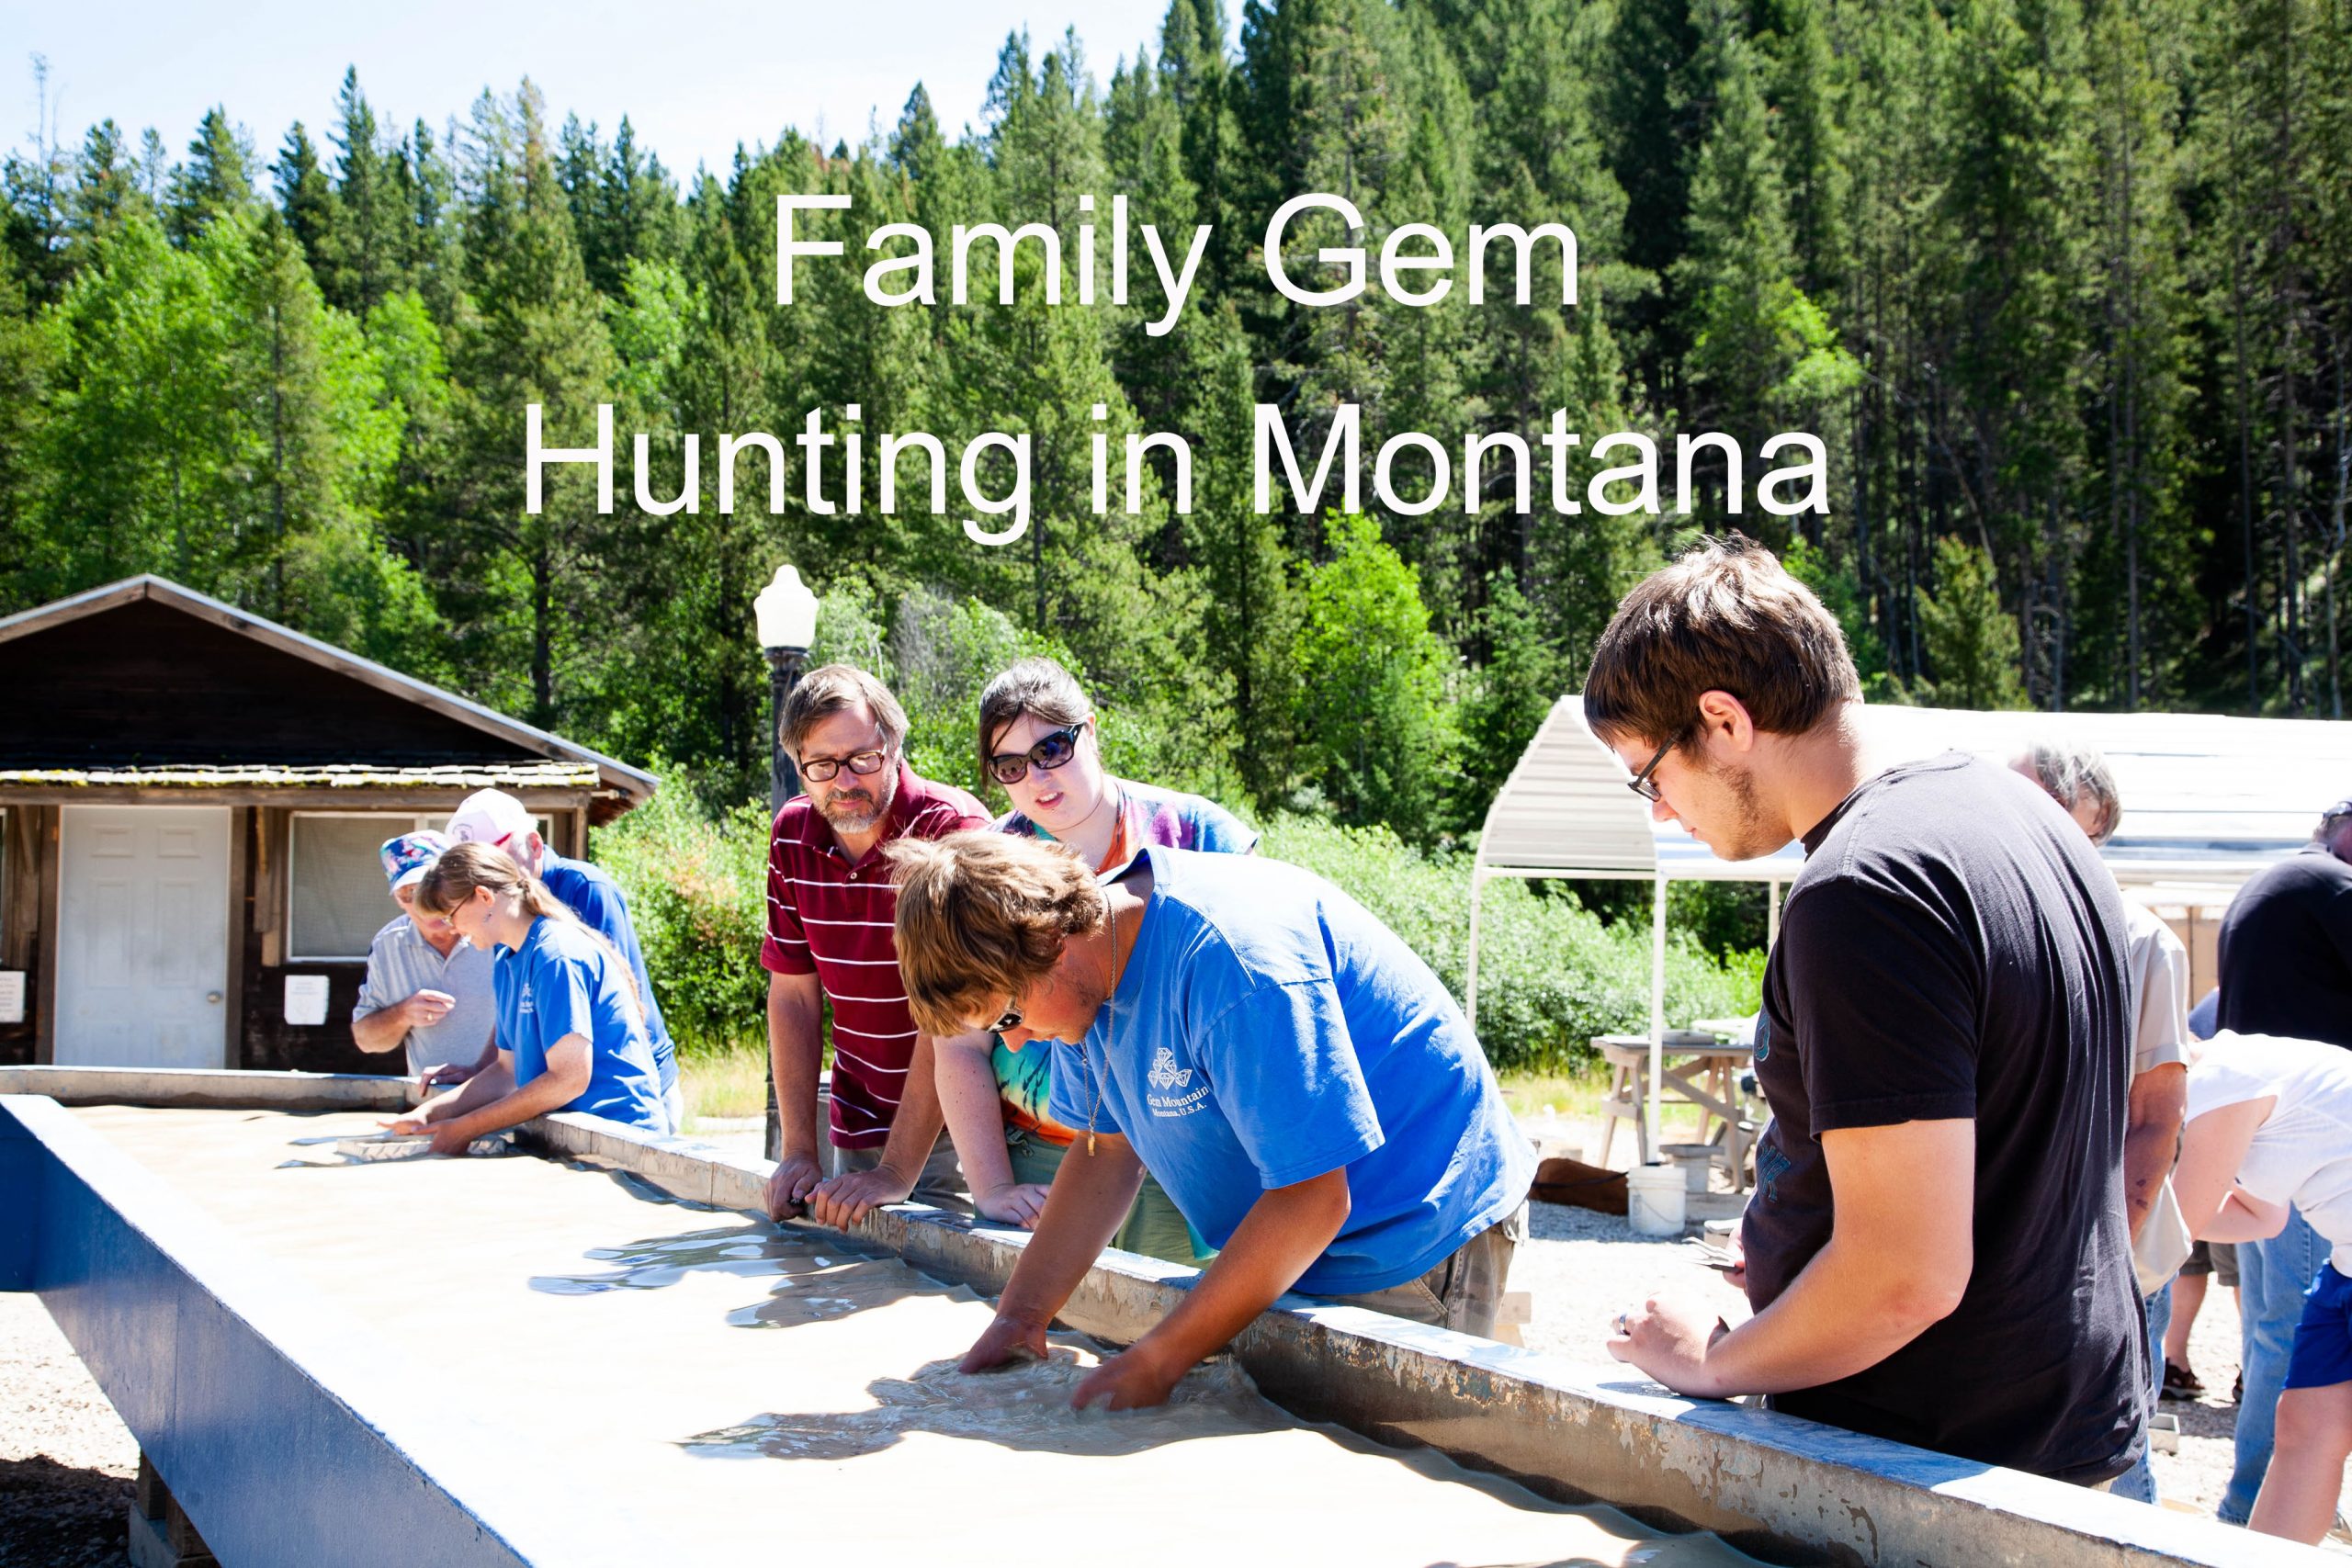 Family gem hunting in montana.